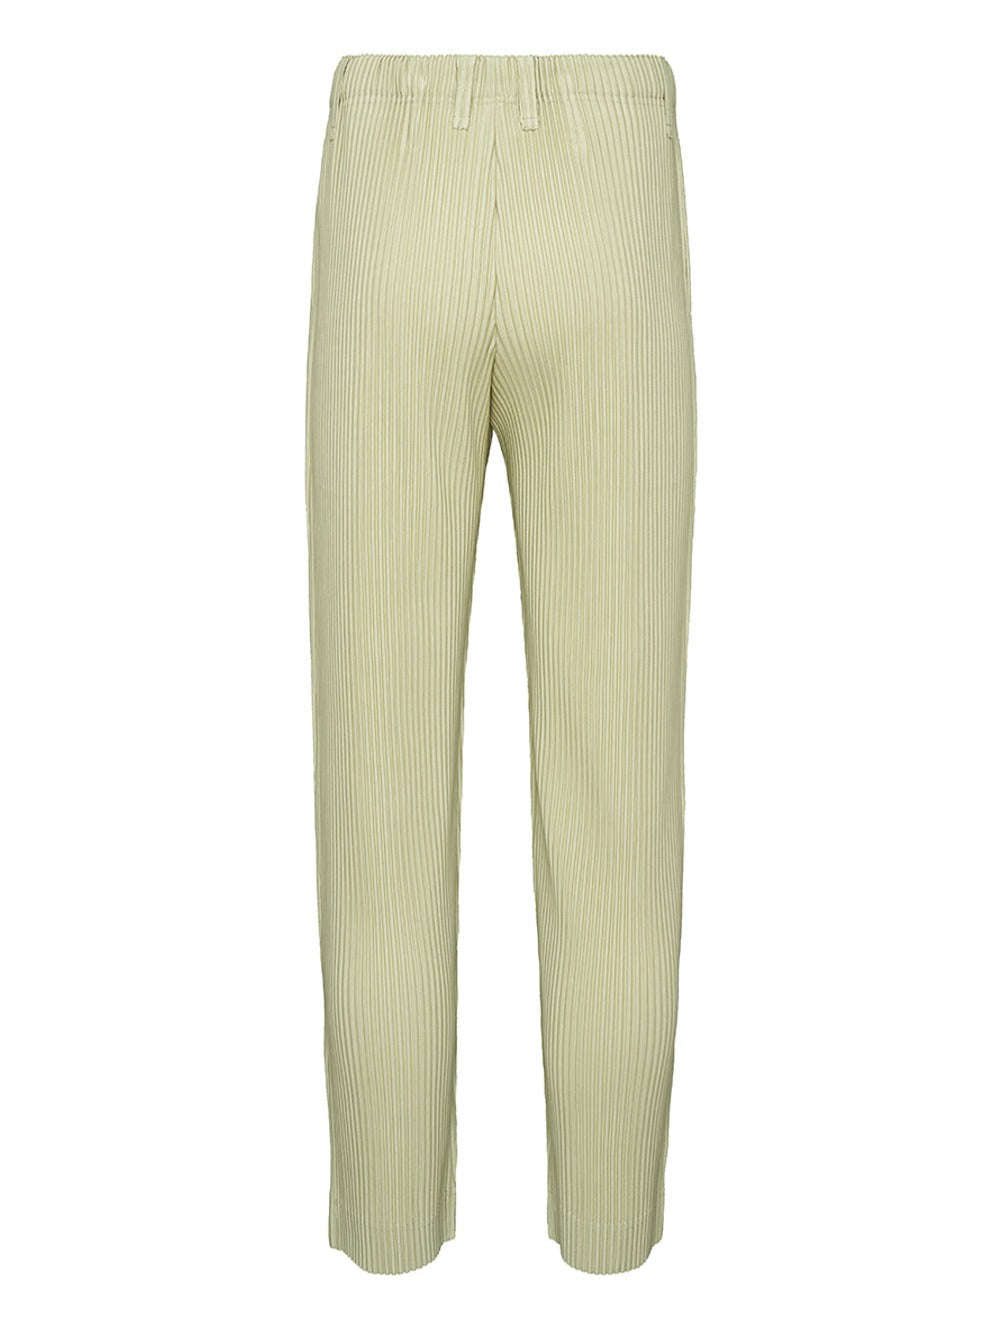 HOMME PLISSE ISSEY MIYAKE Tailored Pleats 1 Straight Pants Beige Green 2